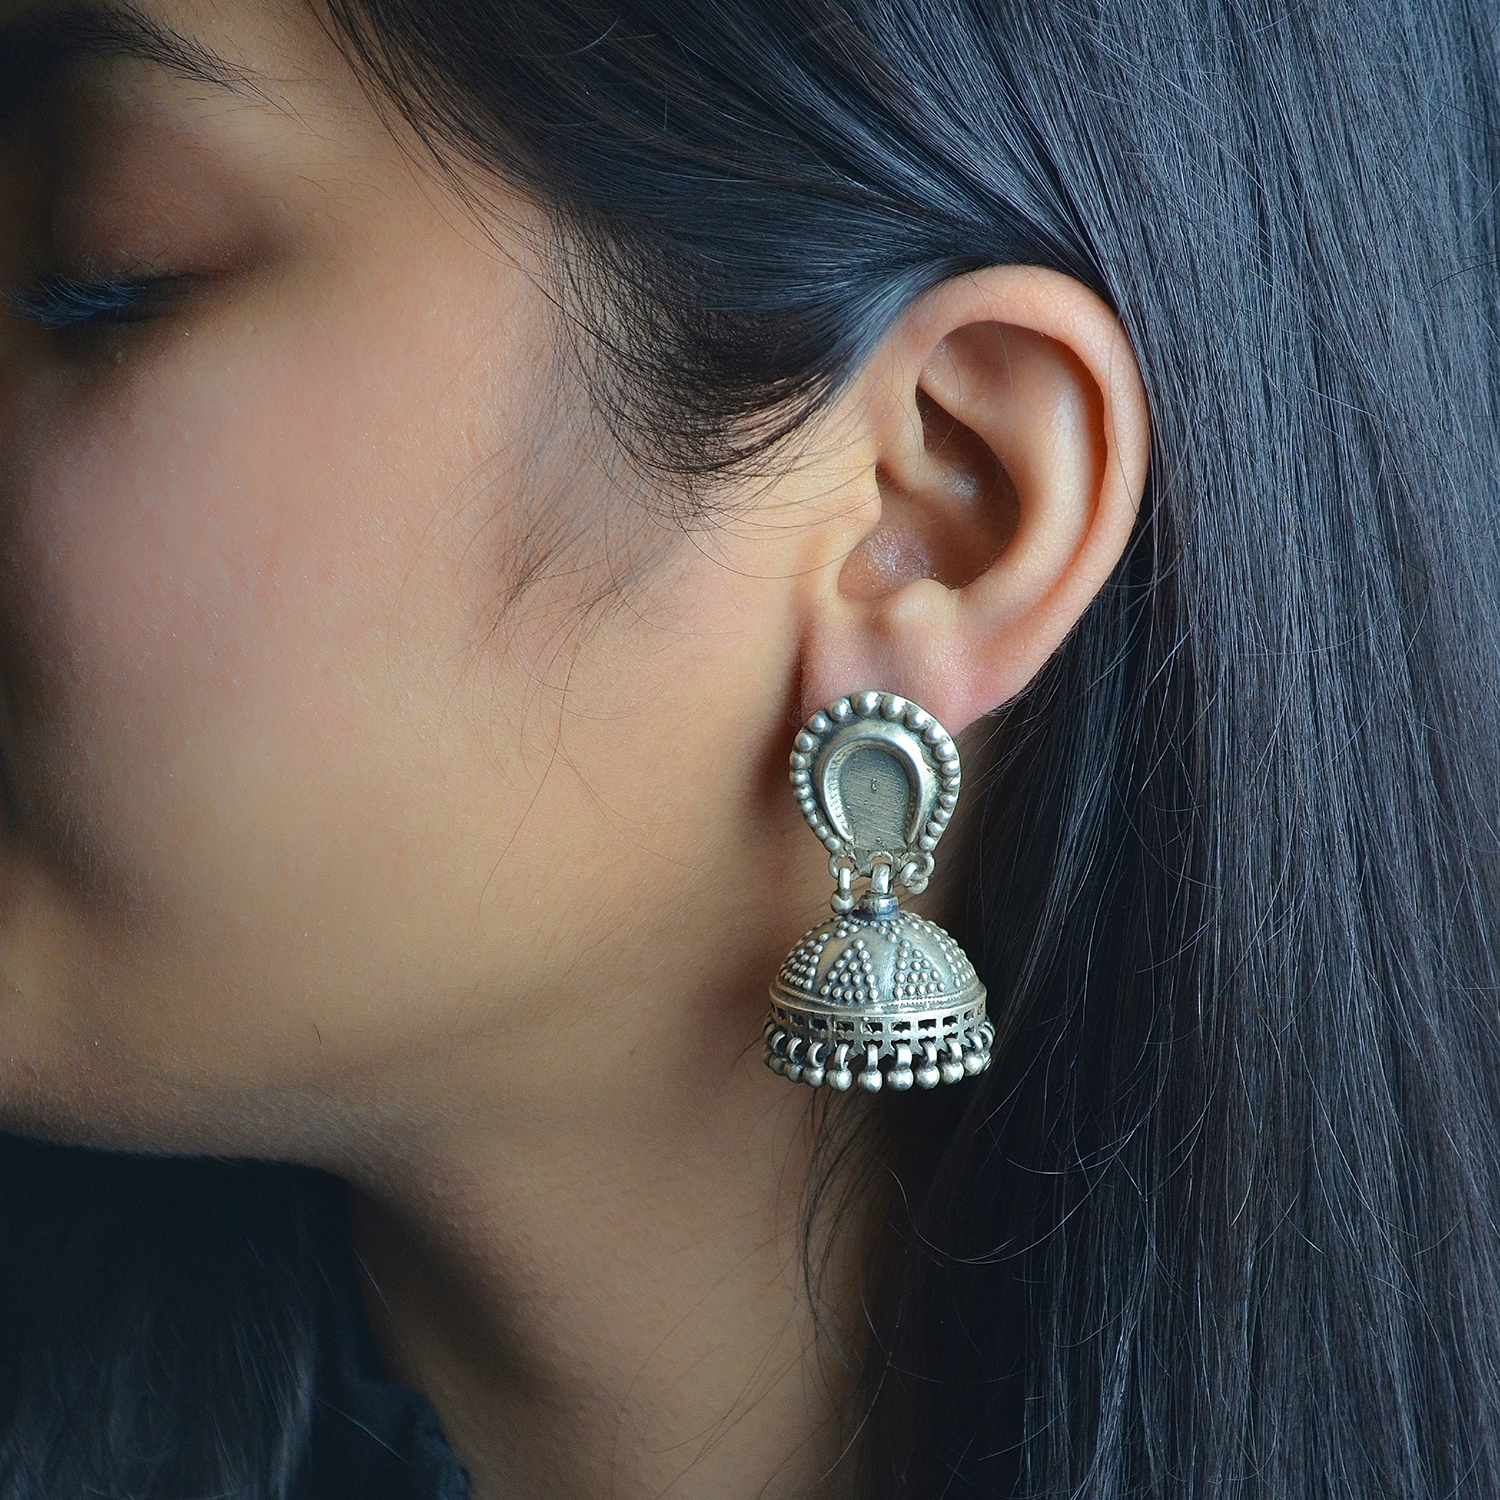 Aggregate more than 105 earrings jhumka silver